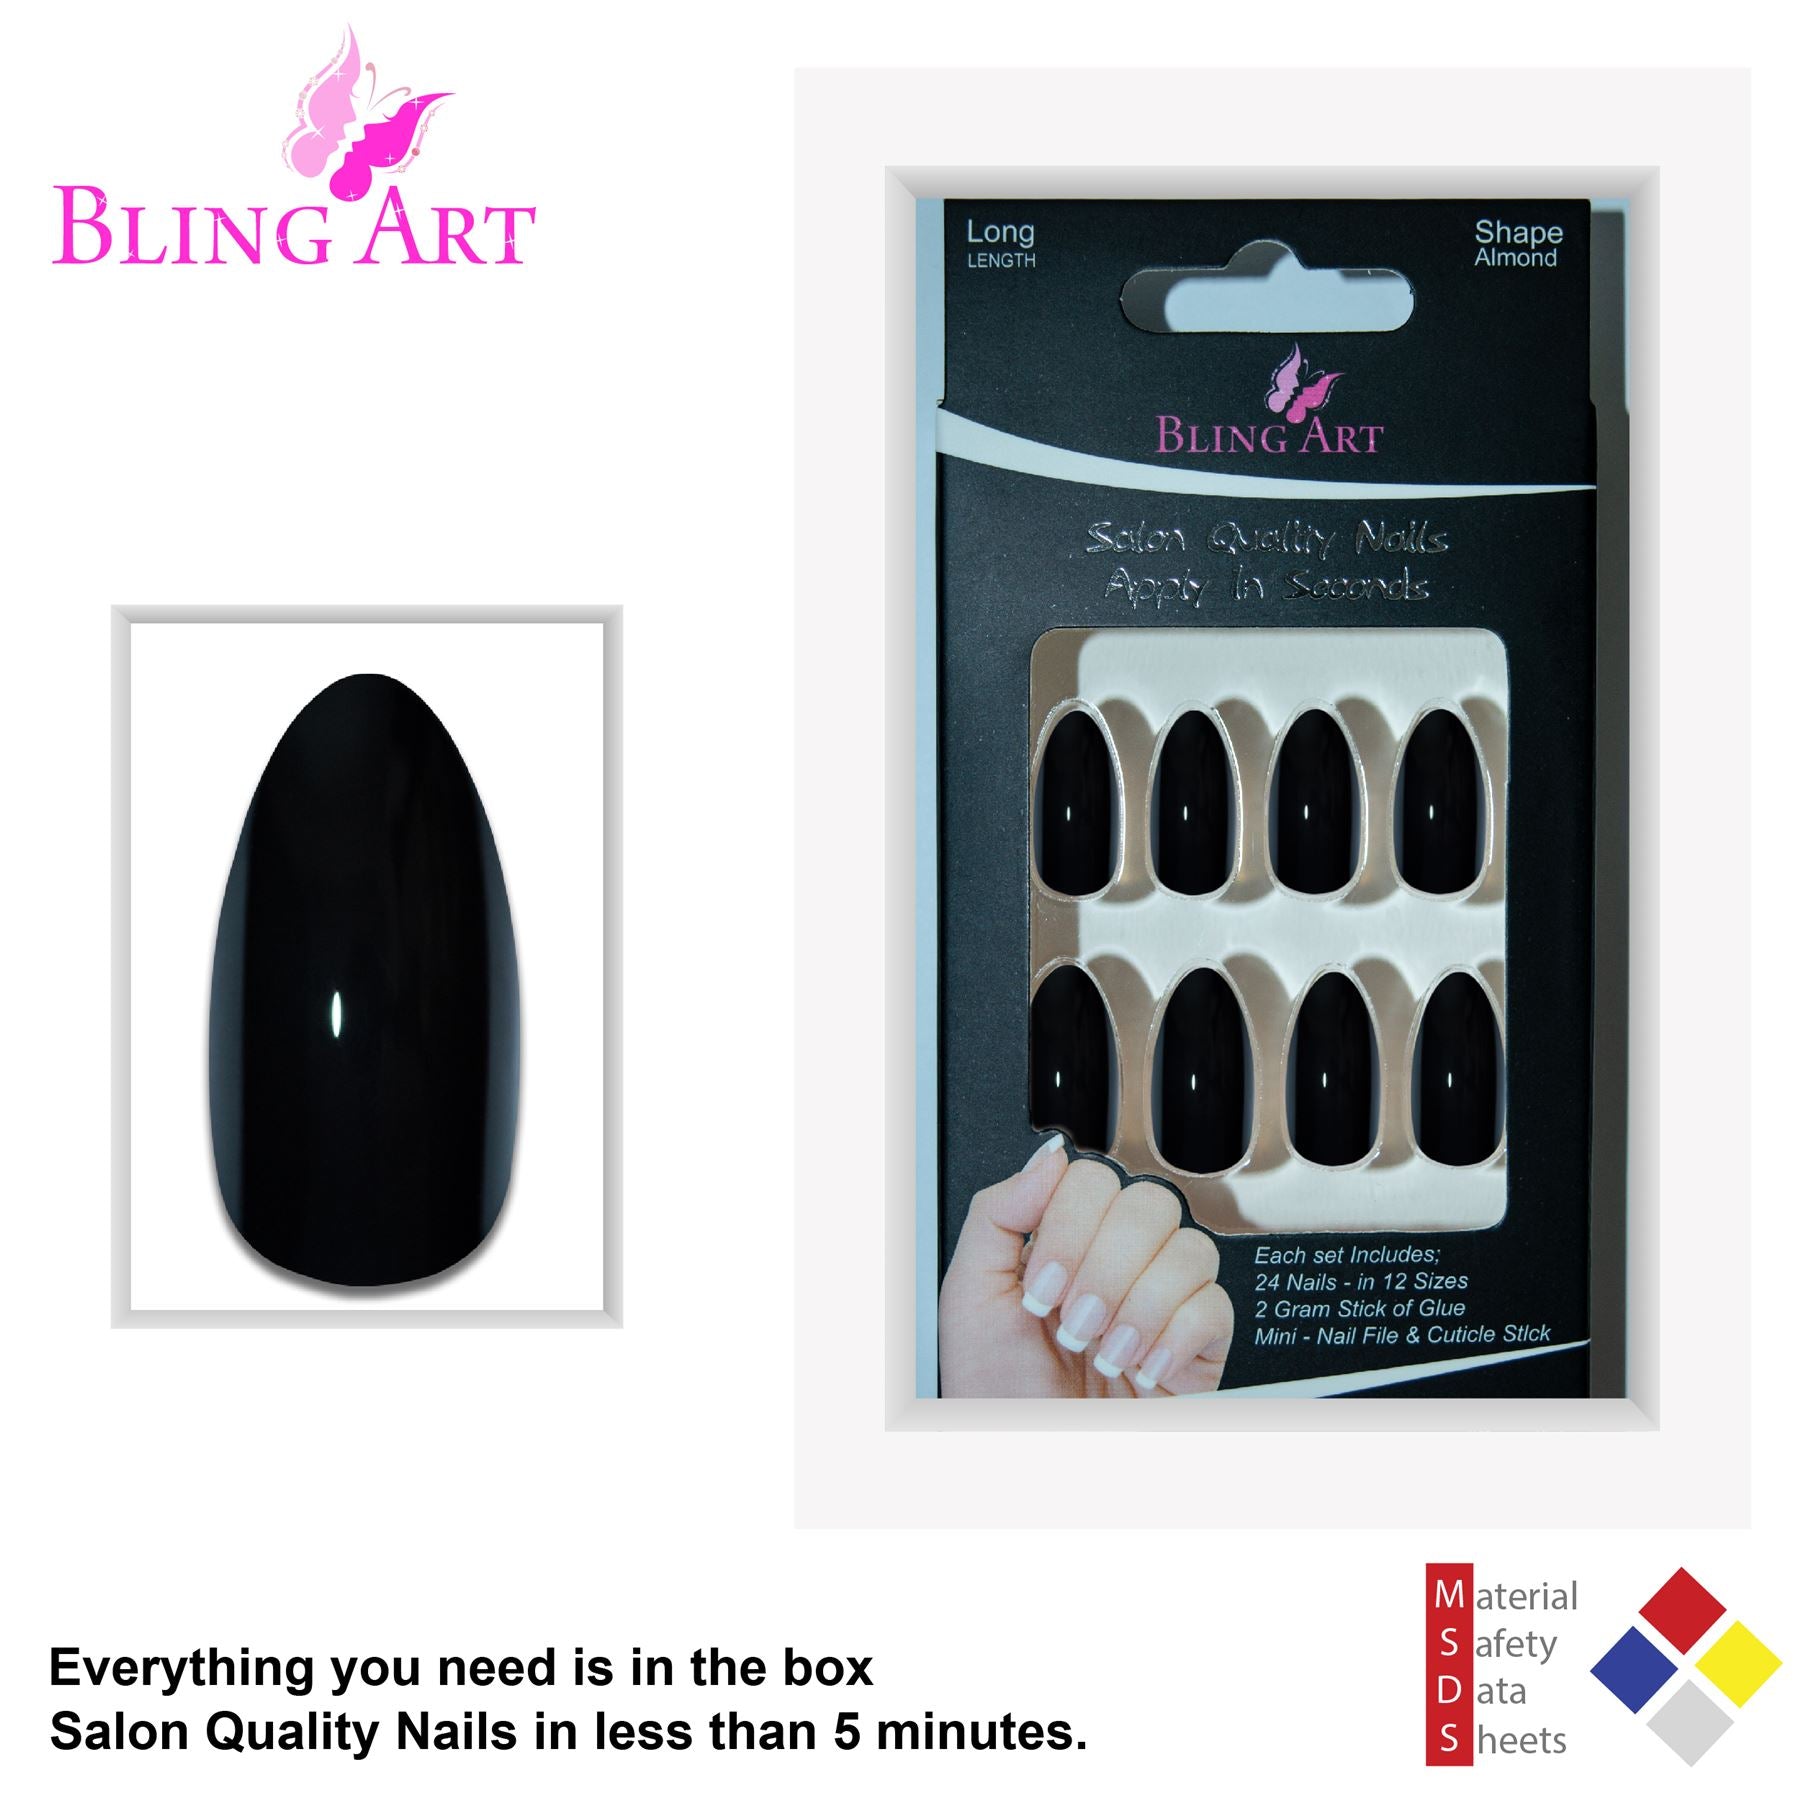 False Nails Bling Art Black Polished Almond Stiletto Long Fake Acrylic Tips Glue